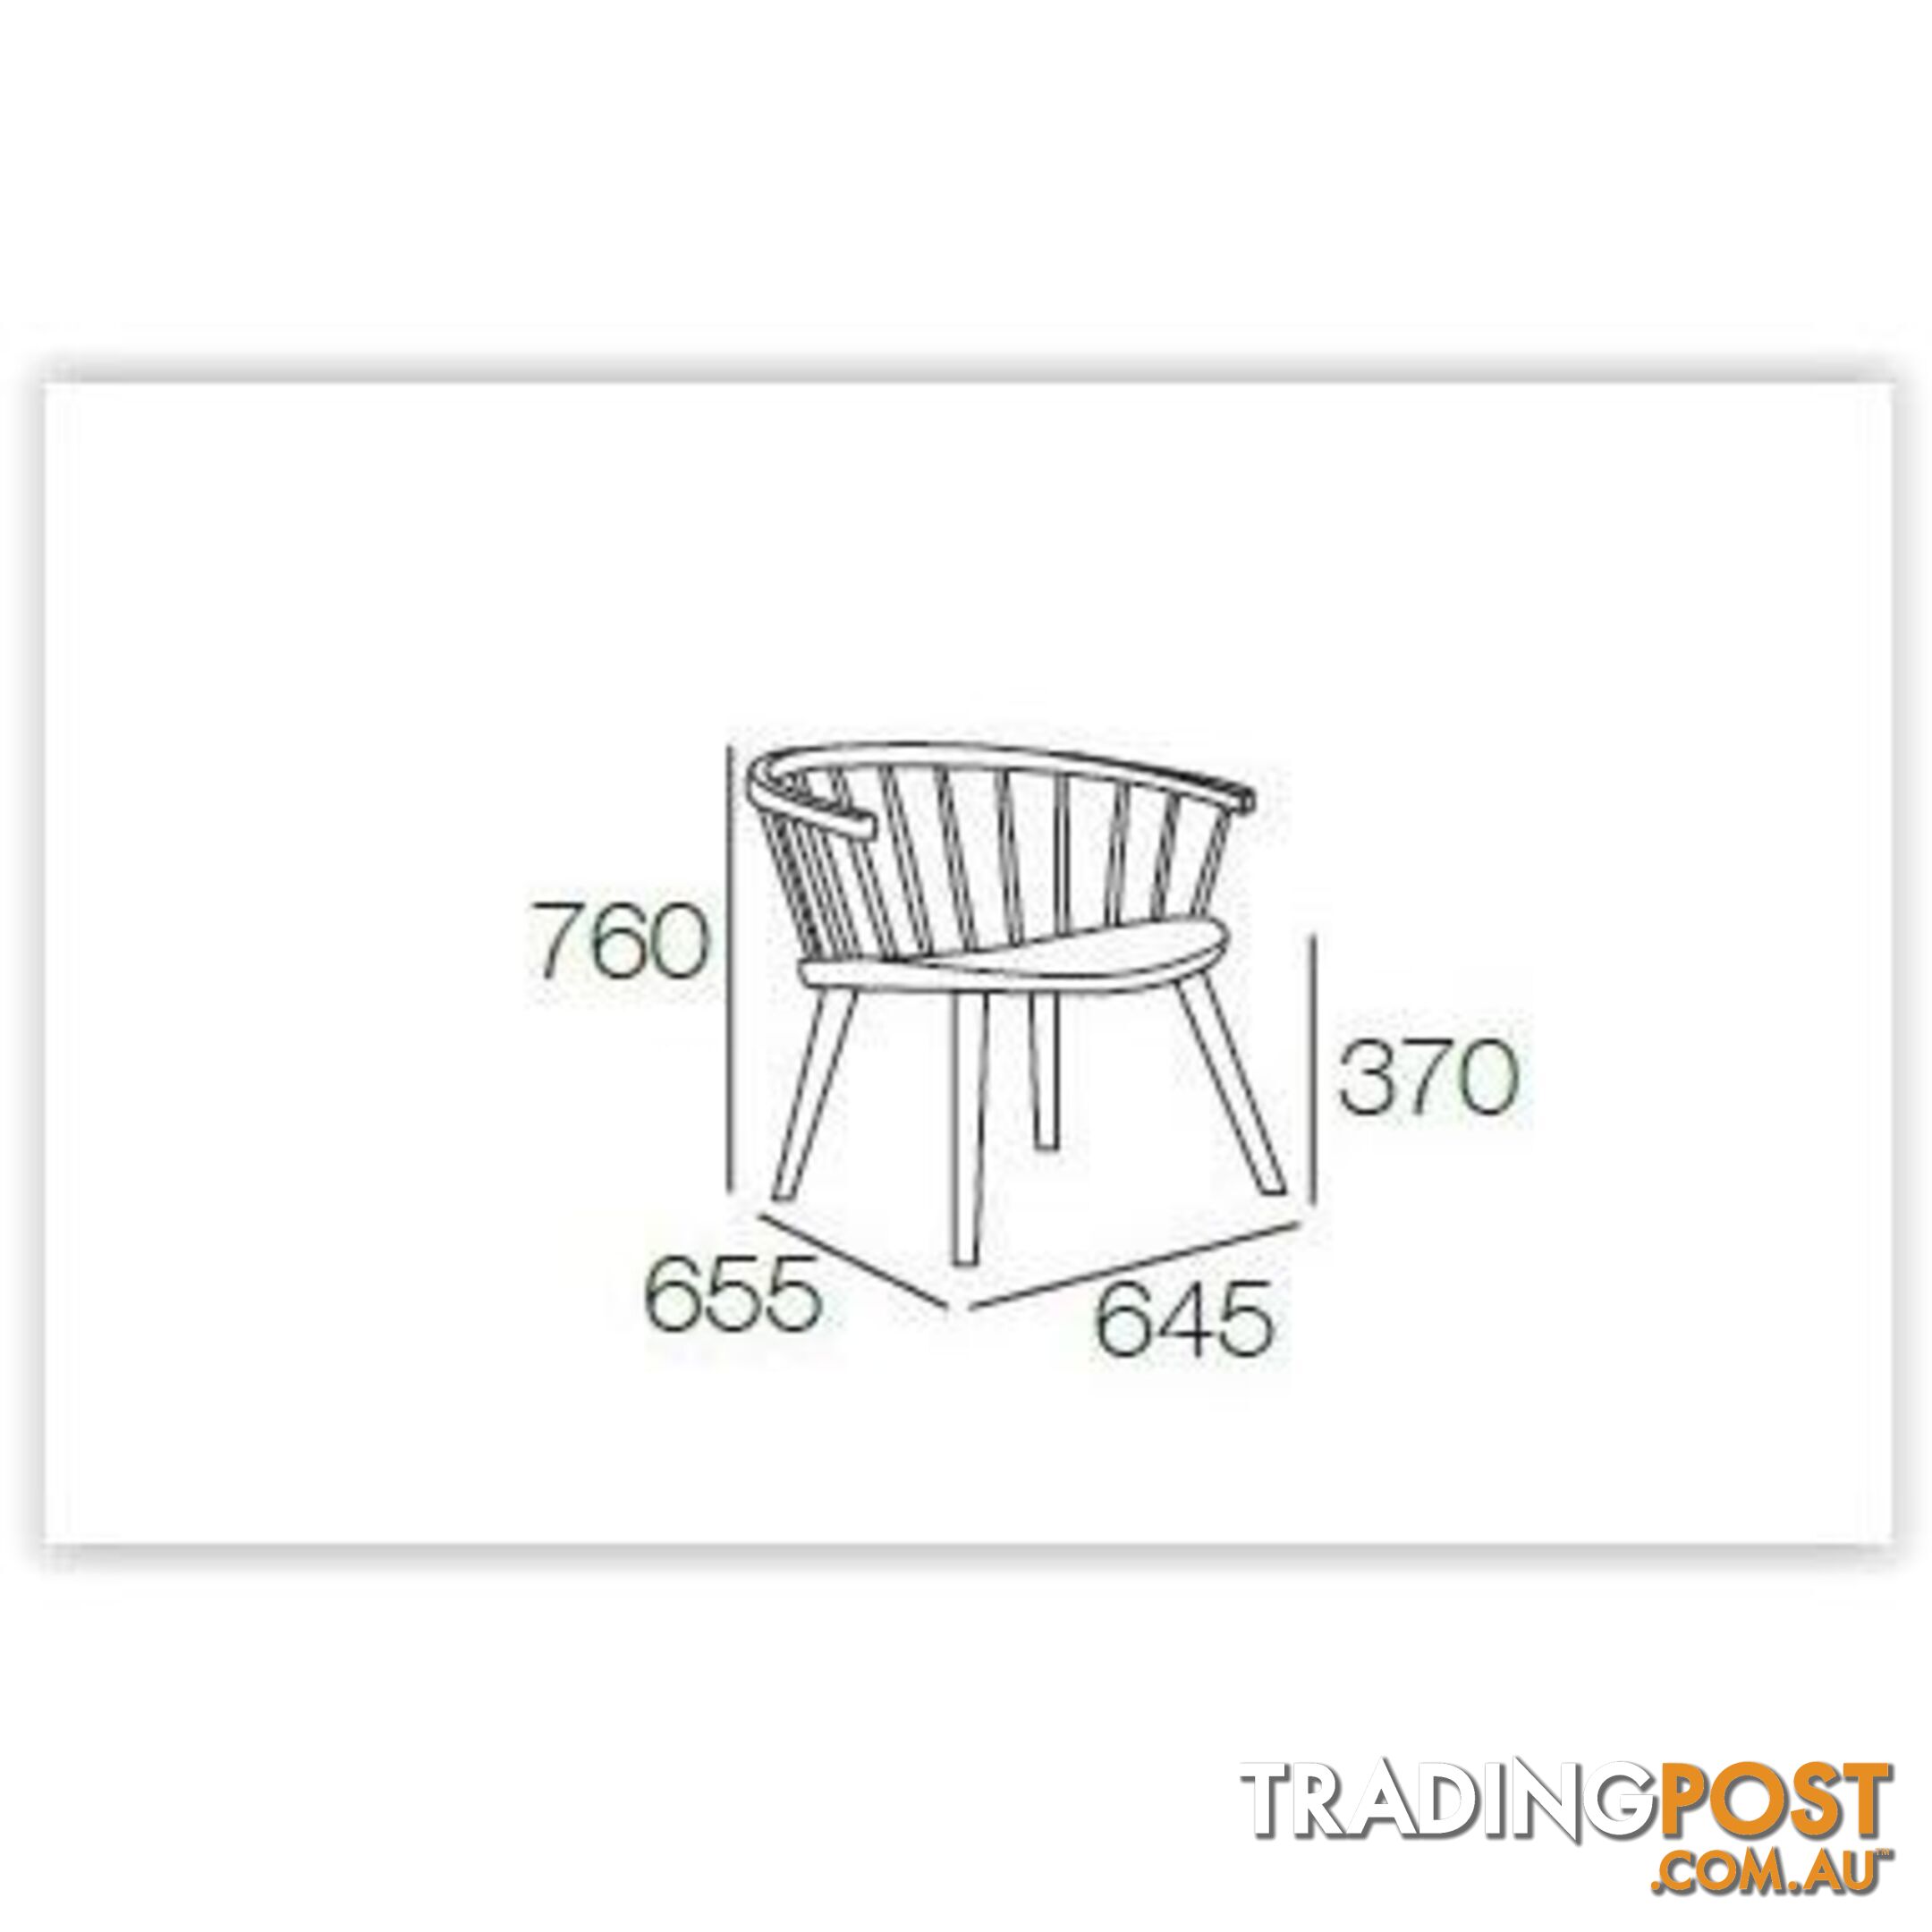 MOKE Lounge Chair Grey with Mint cushion - MOKE_LC1203-0002 - 9334719003283